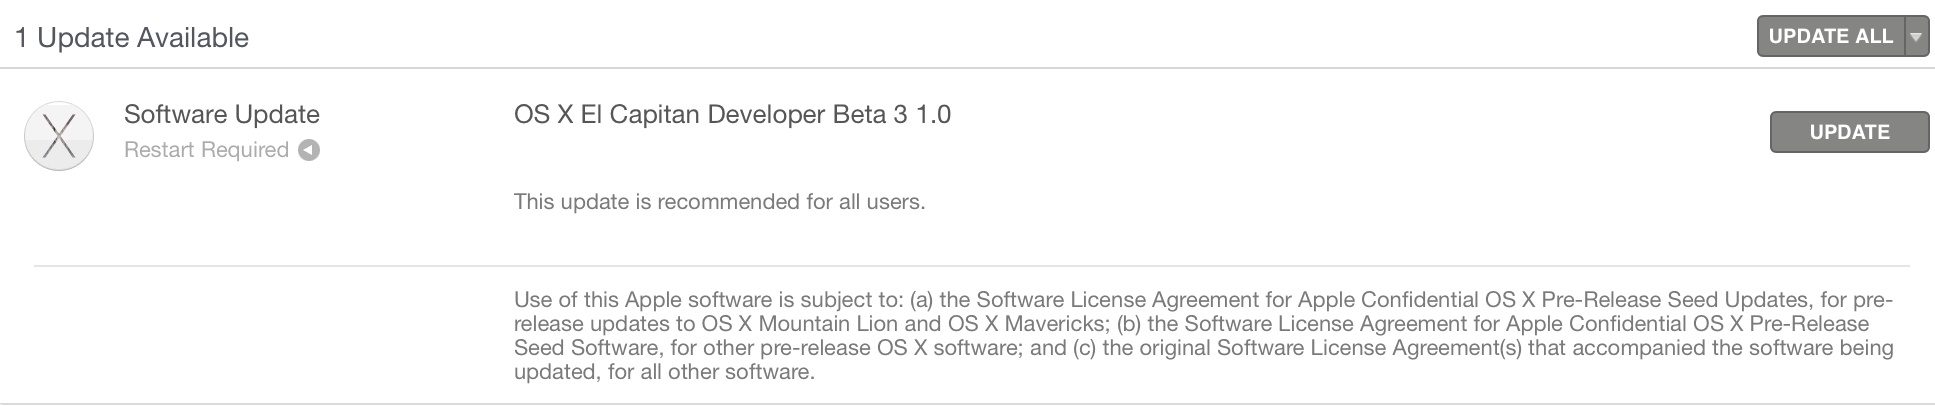 Descargar OS X El Capitan Developer beta 3 1.0